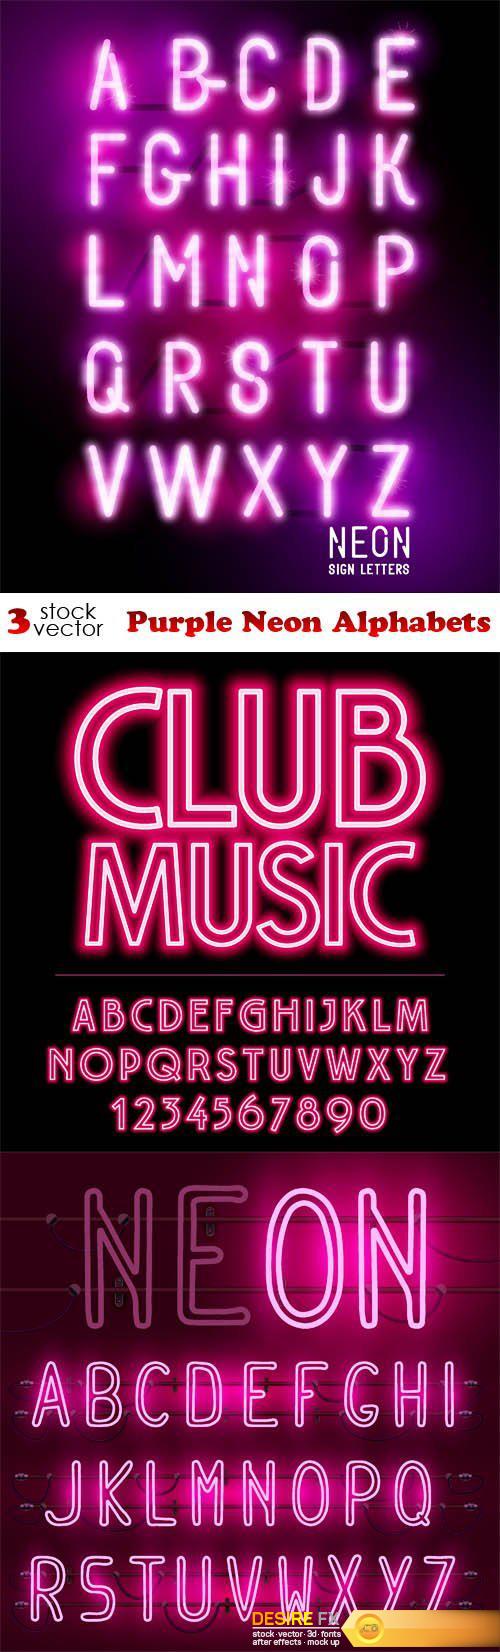 Vectors - Purple Neon Alphabets